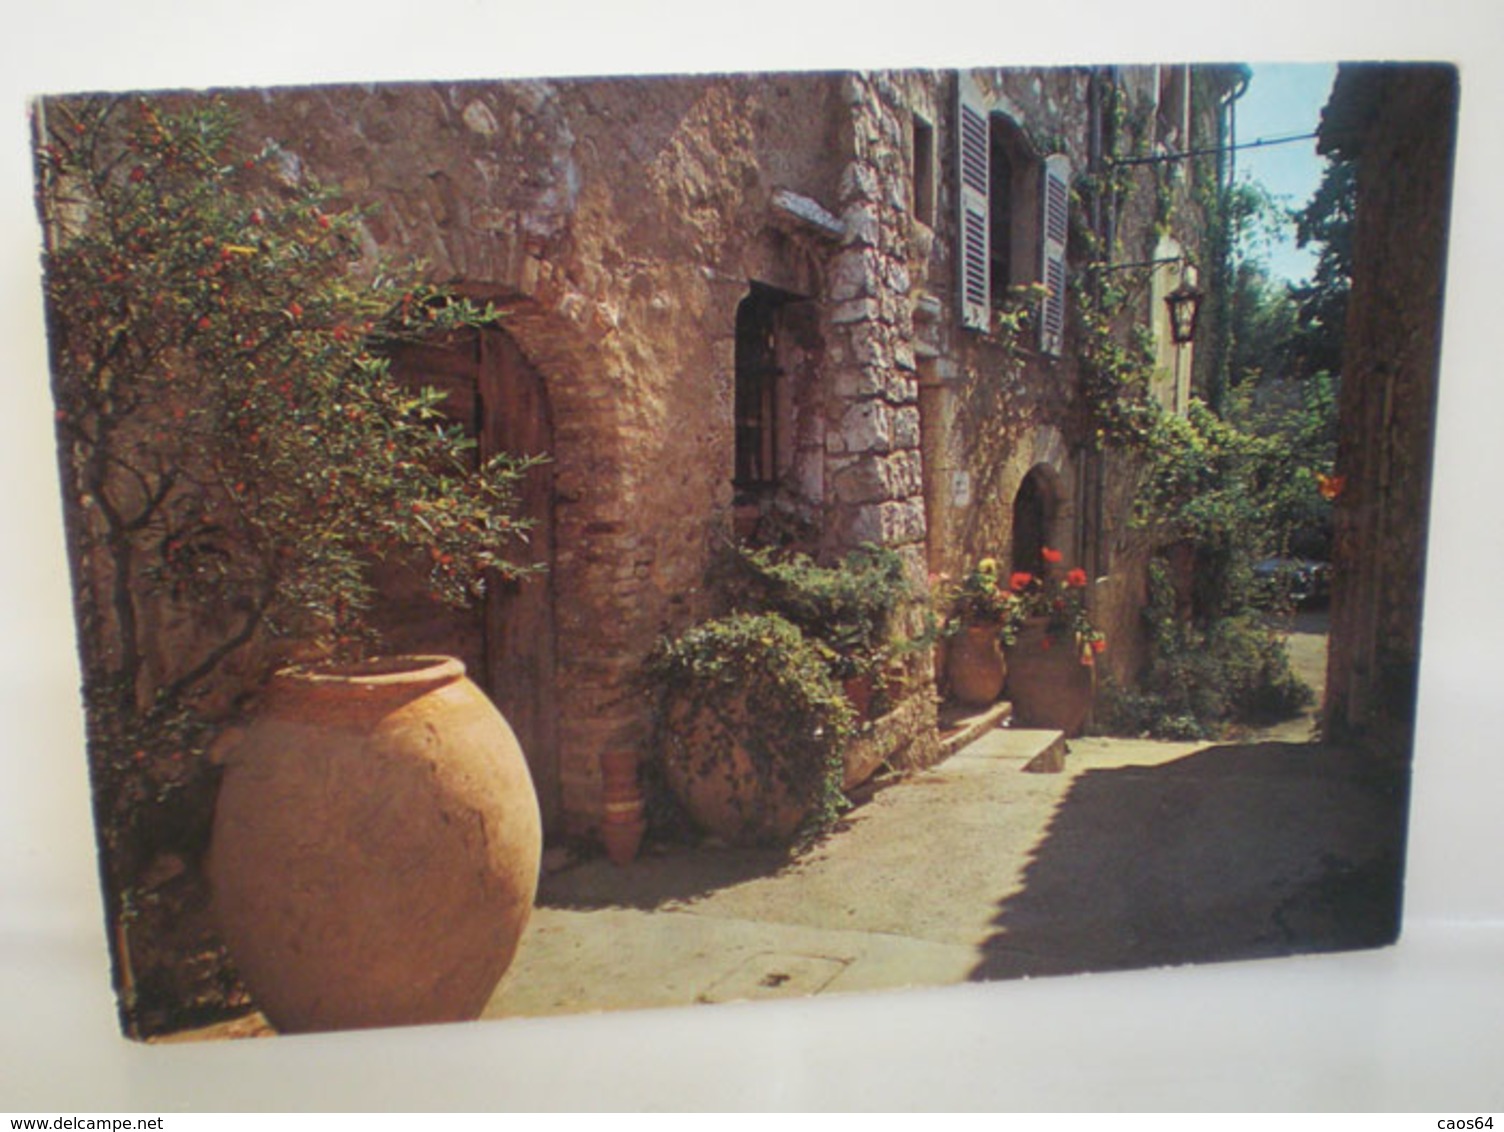 1986 Storia Postale Francia Targhetta St Paul Arts Tourismo Su Cartolina - Storia Postale